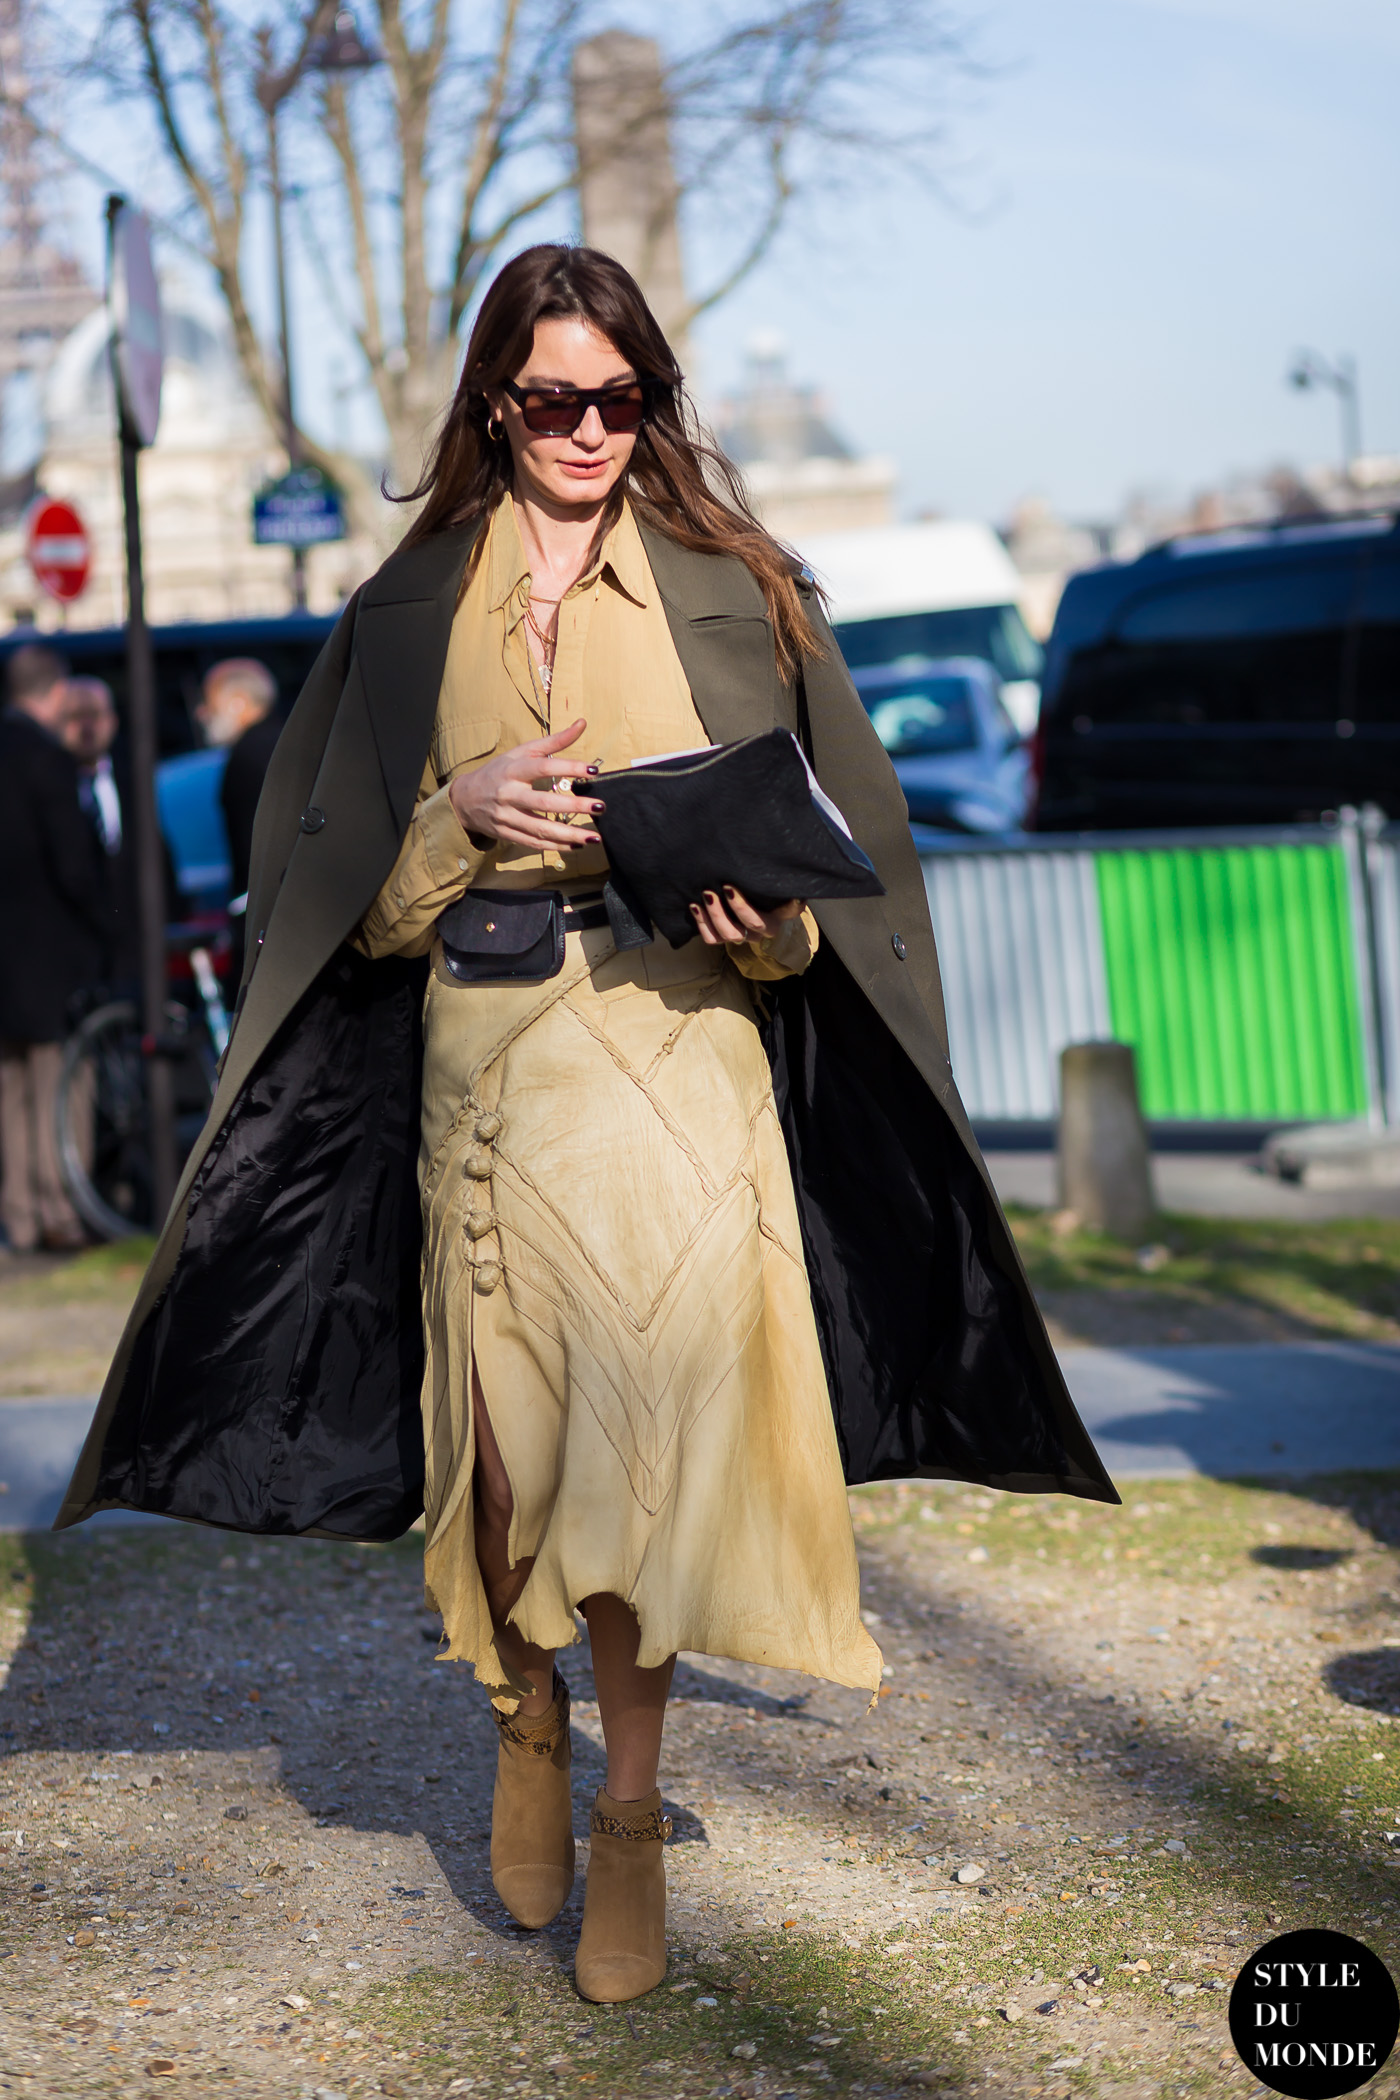 Paris Fashion Week FW 2015 Street Style: Ece Sukan - STYLE DU MONDE ...